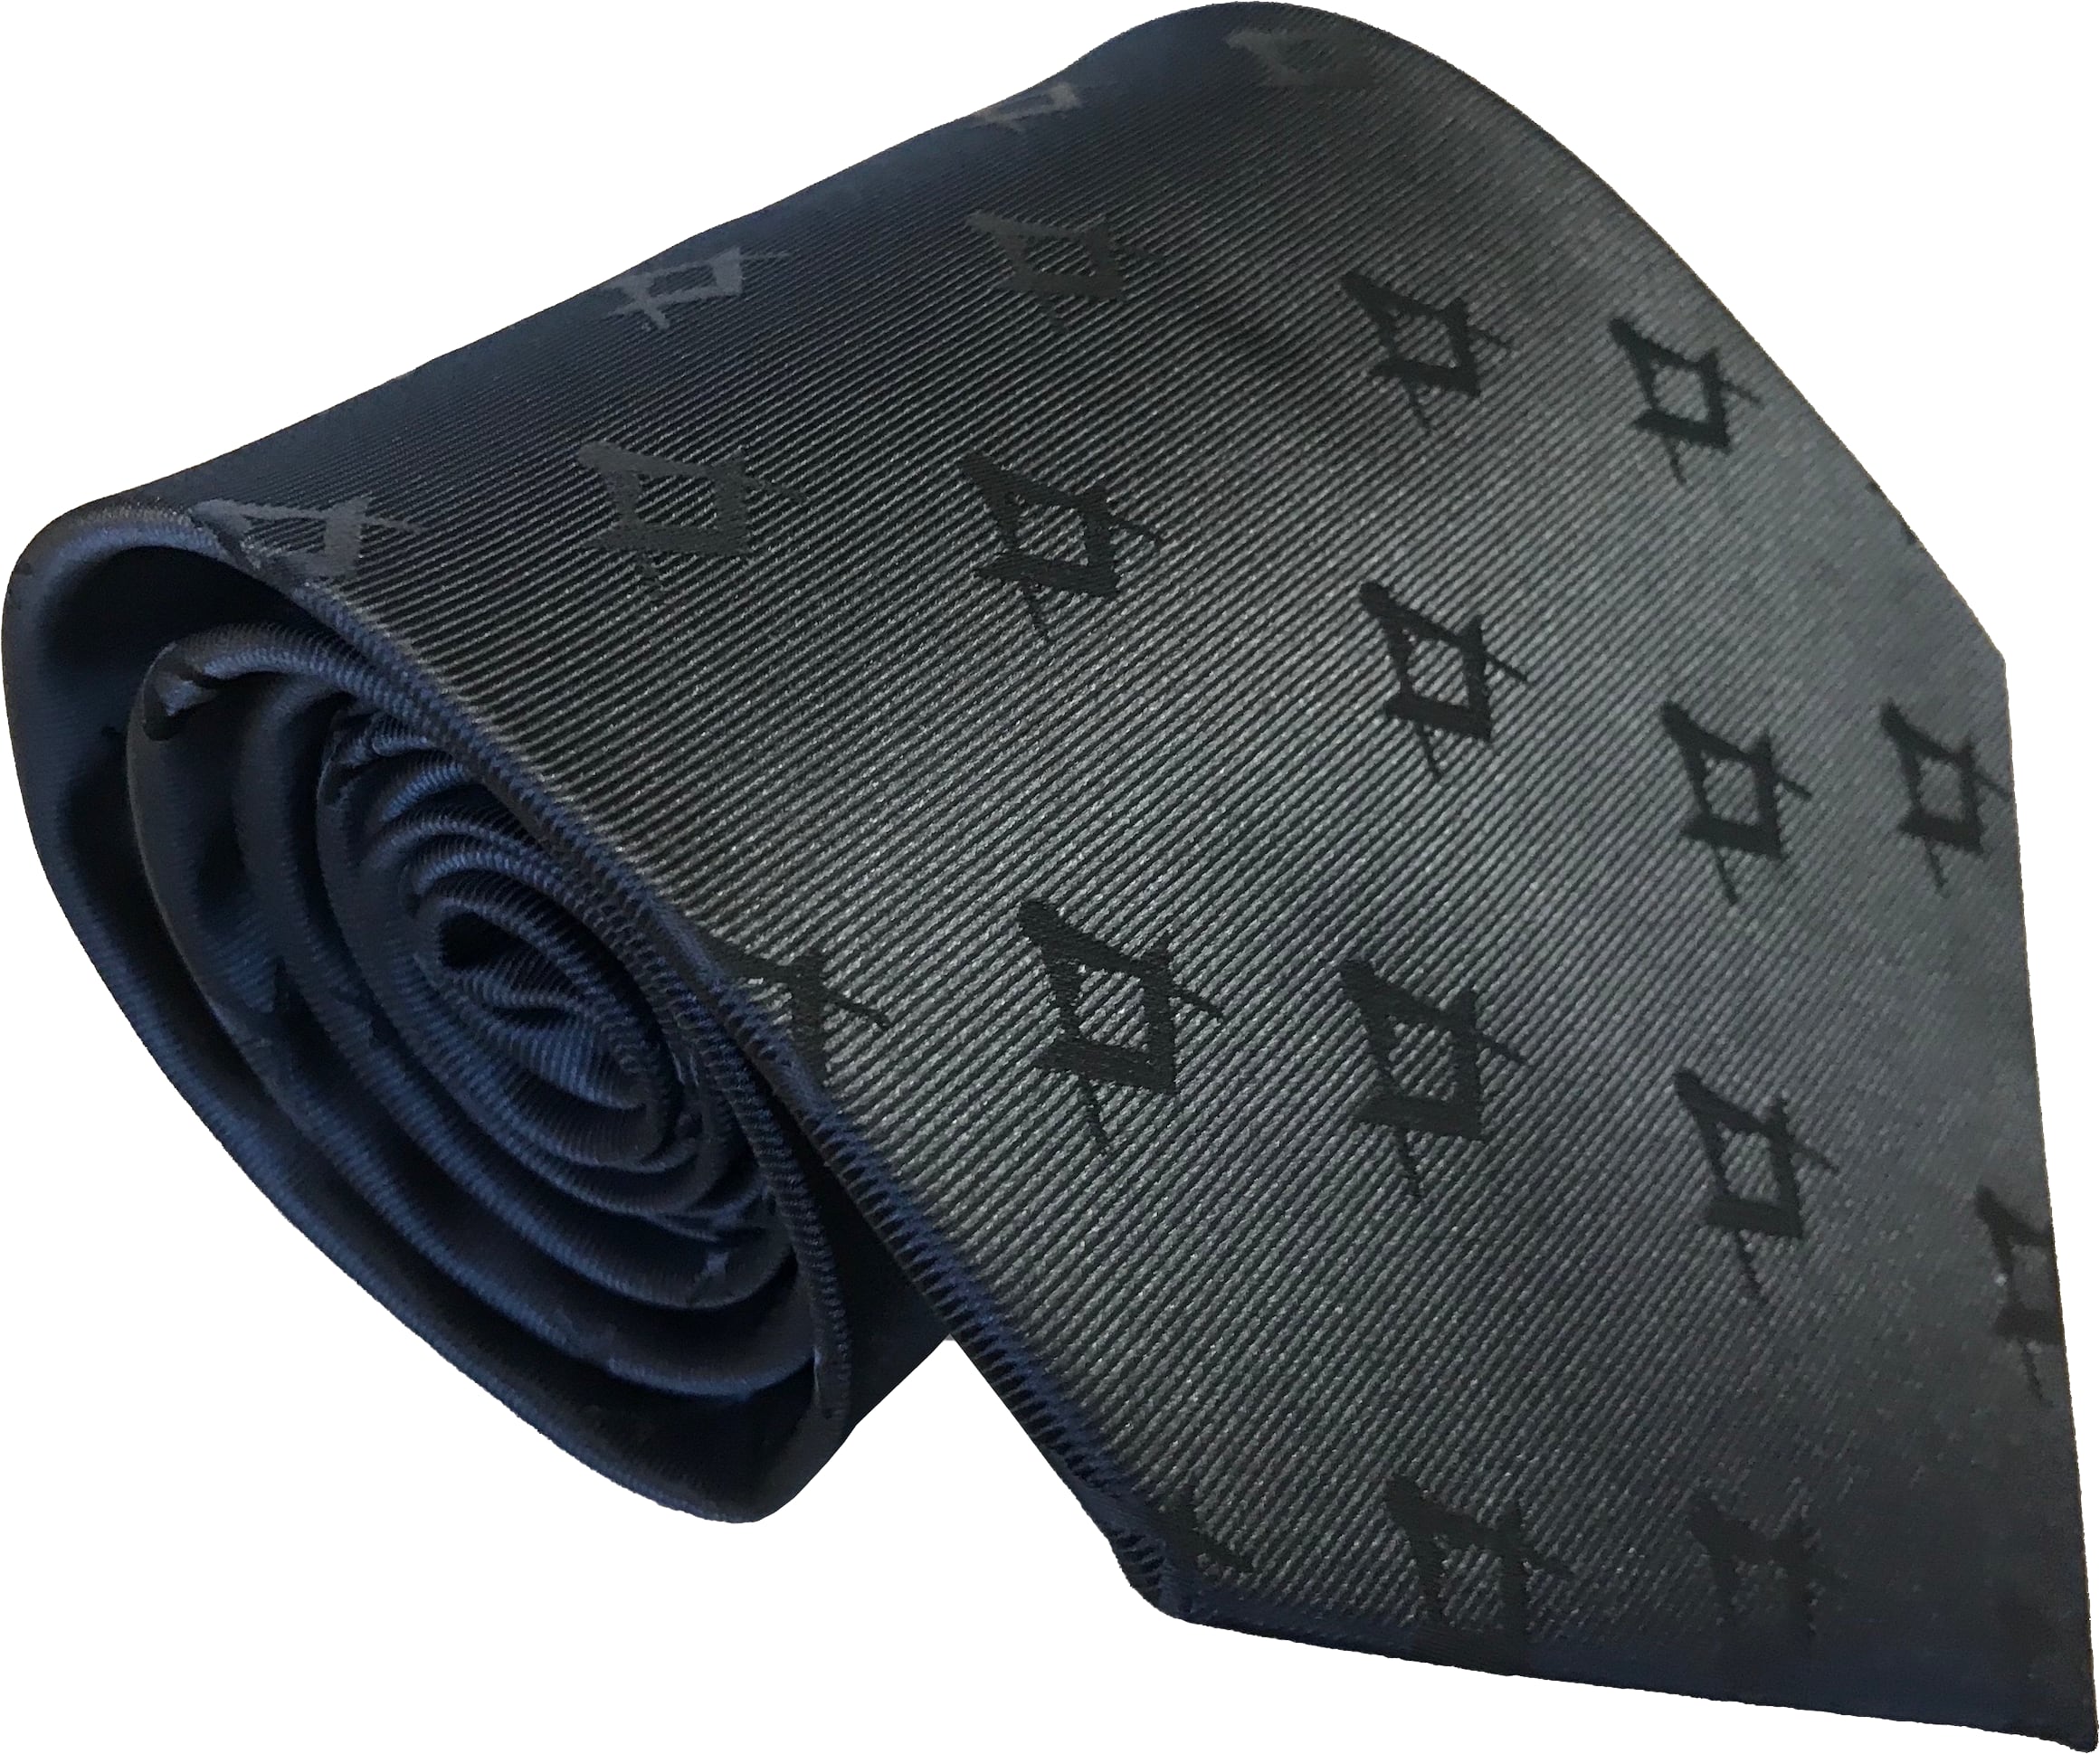 Black Masonic Tie with Freemason Square and Compass Optional